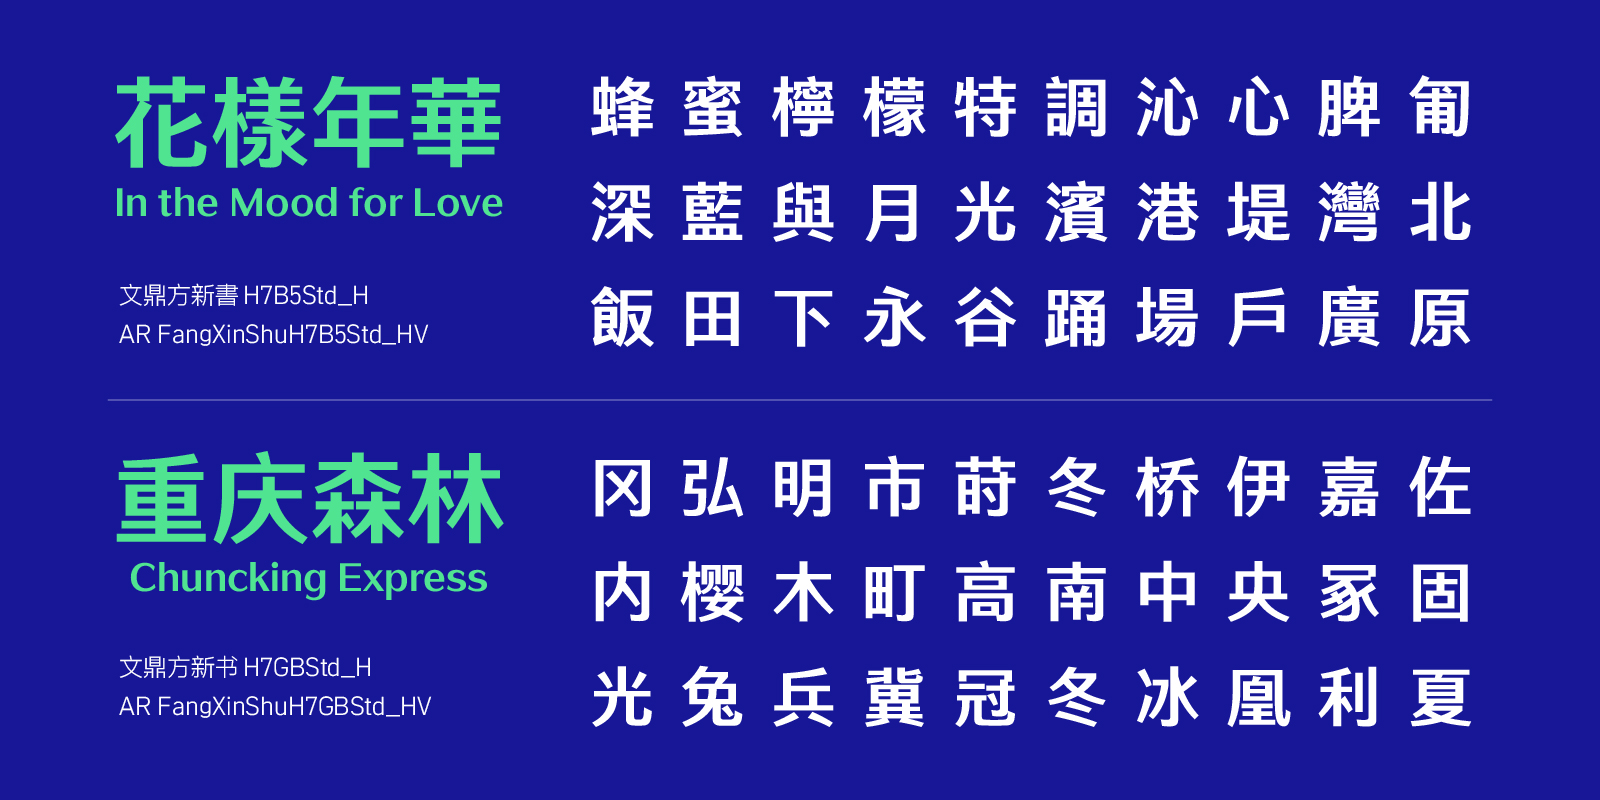 Card displaying AR FangXinShuH7GBStd typeface in various styles